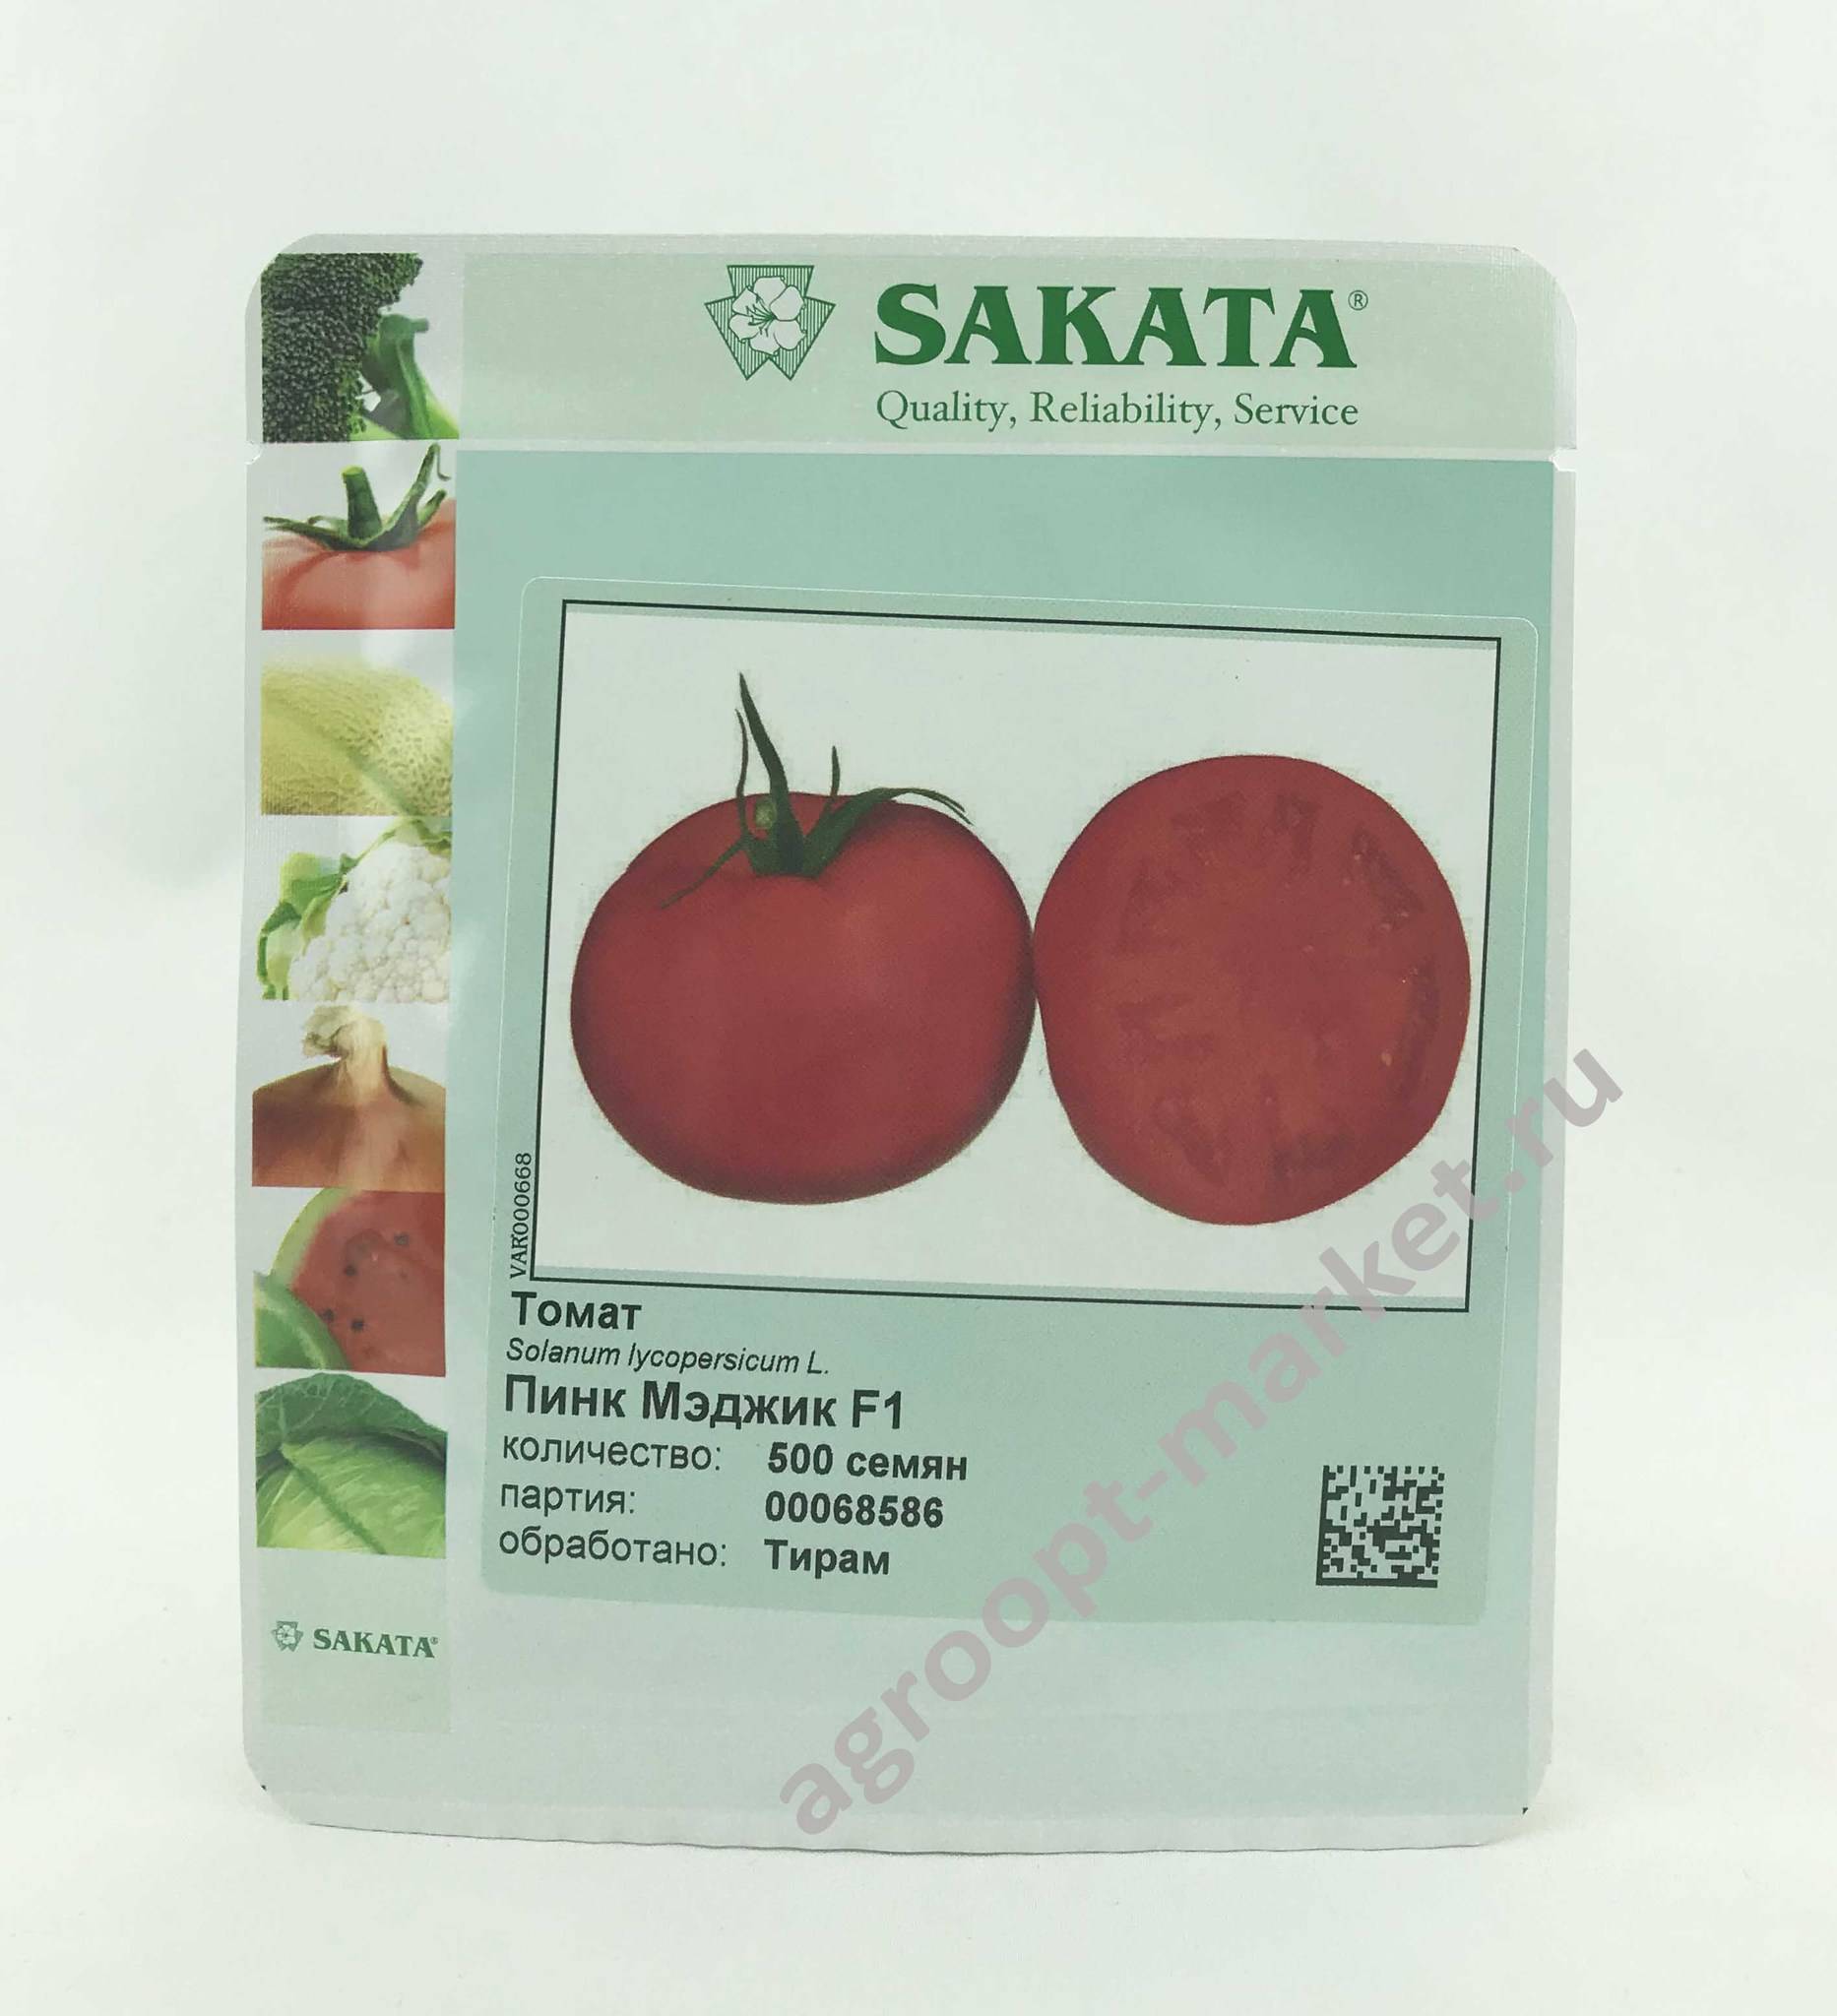 ᐉ томат "пинк импрешн f1" - очень скороспелый томат, родом из японии - orensad198.ru